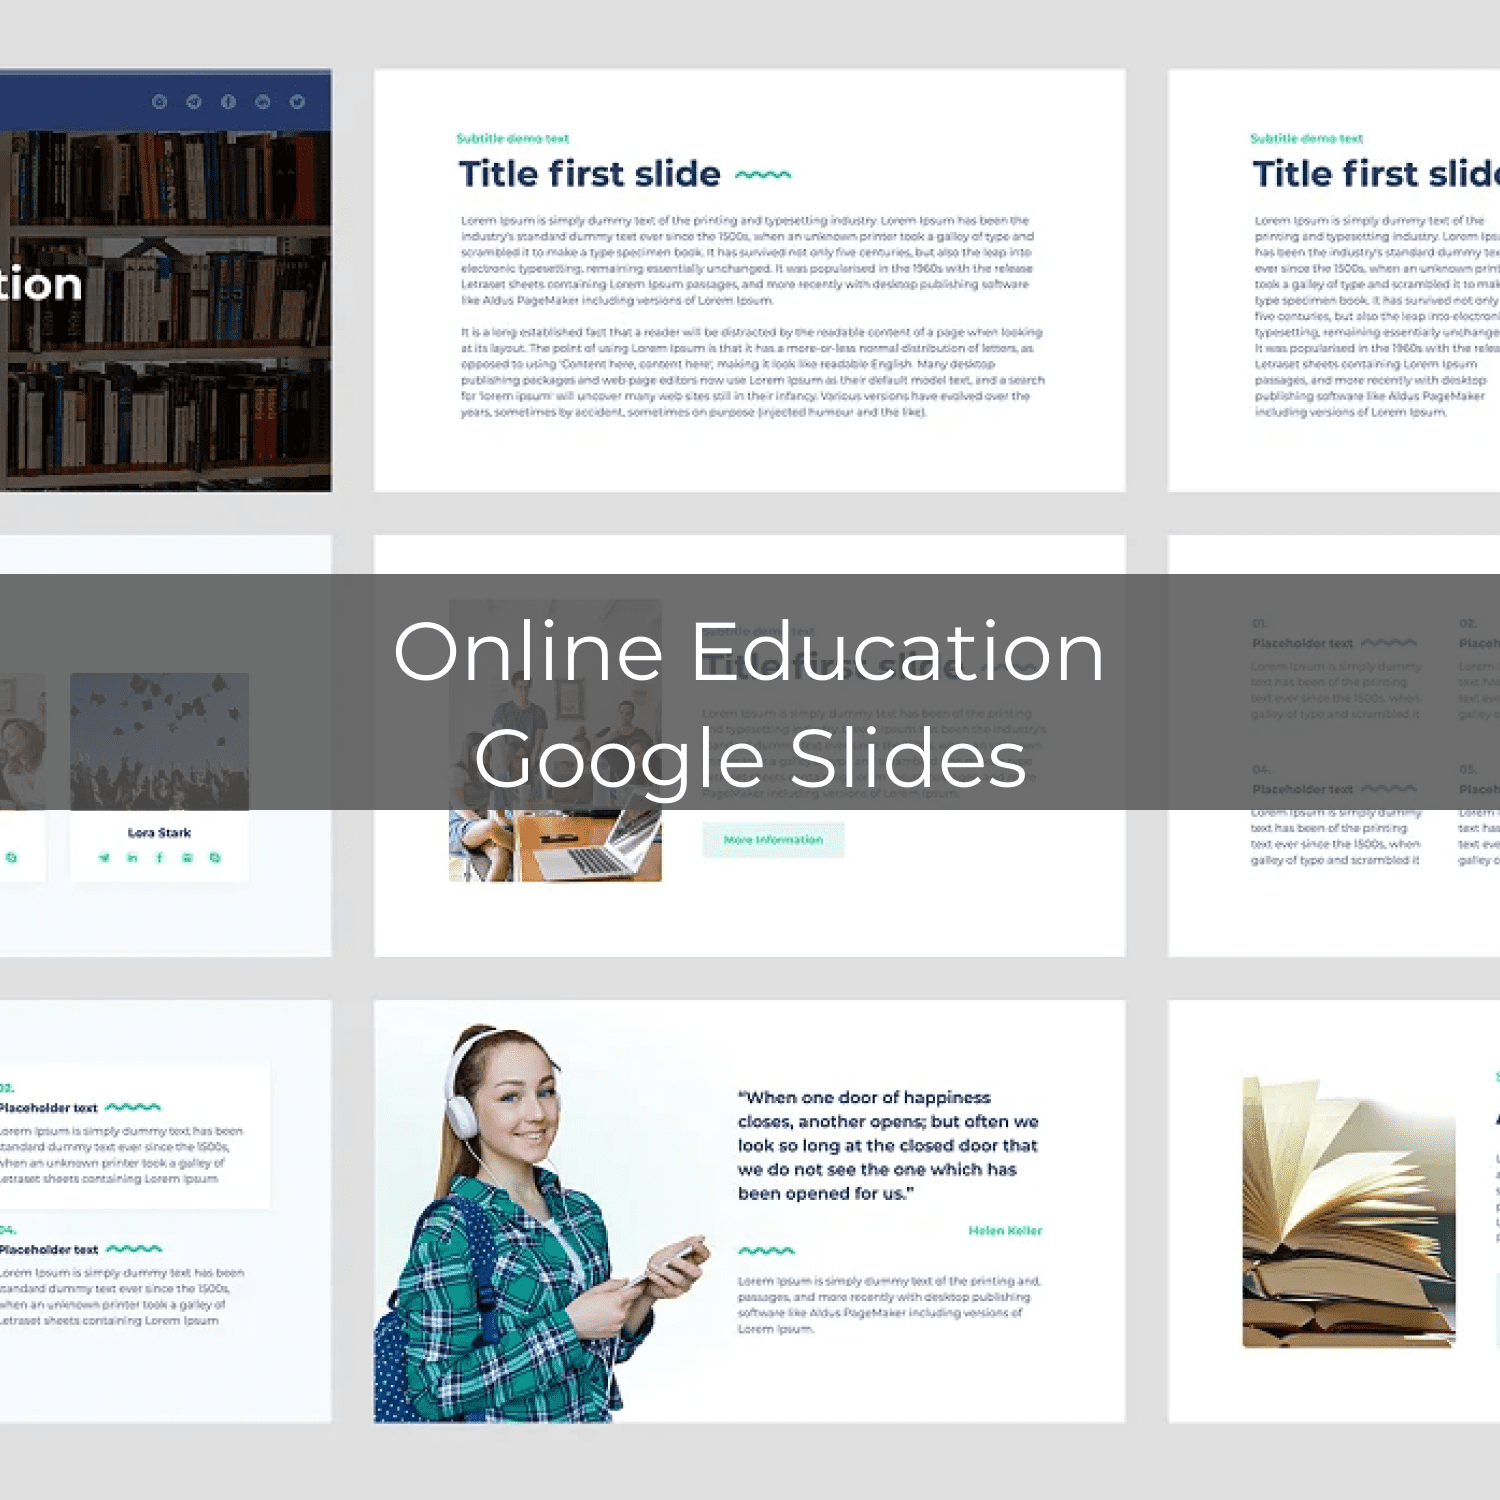 online education google slides preview image.